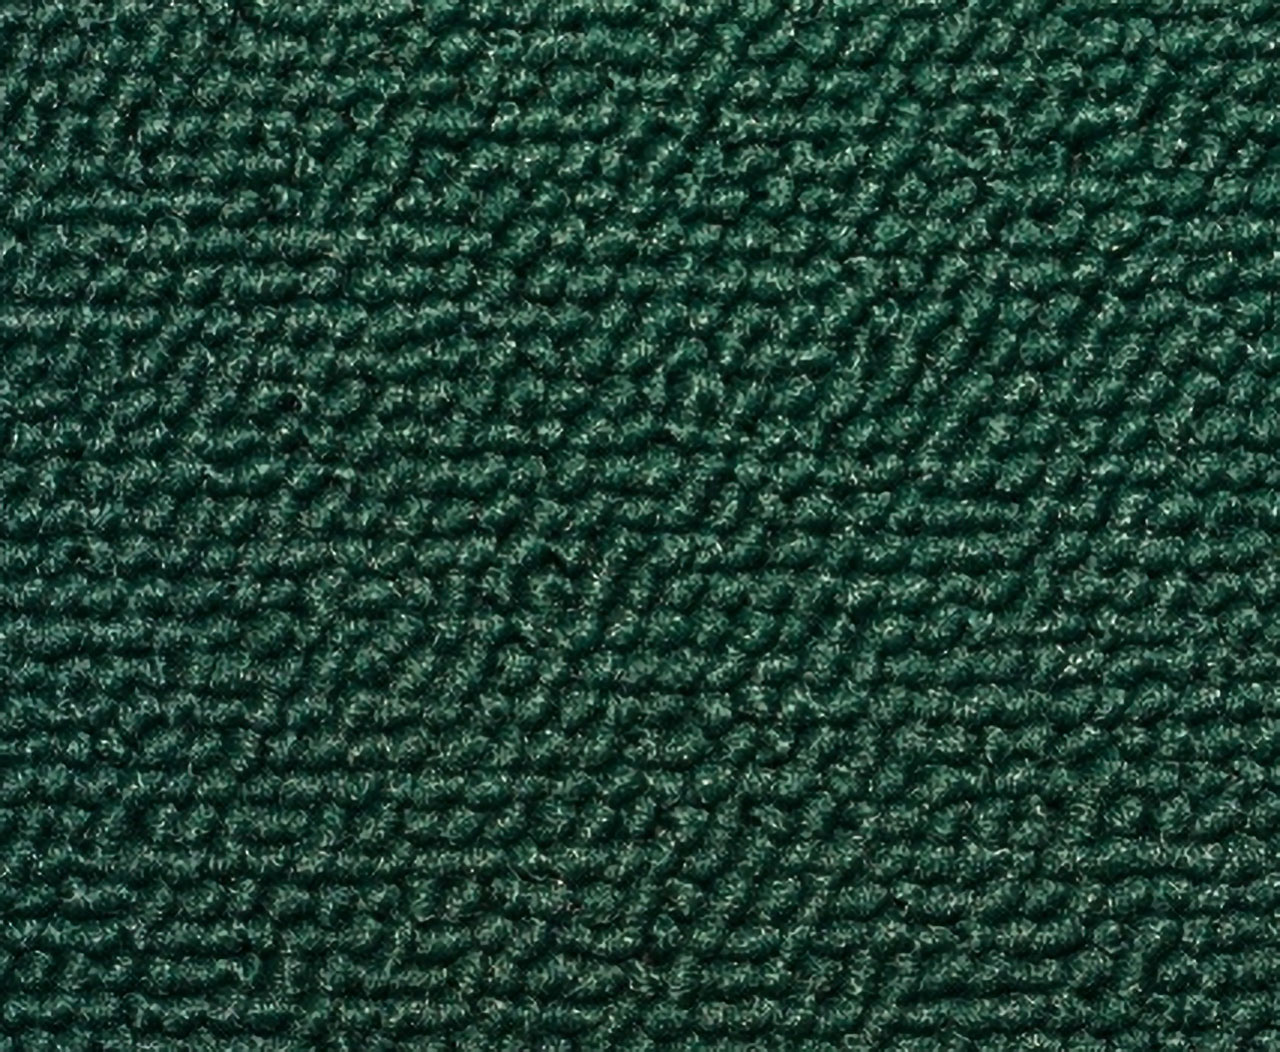 Holden Premier HT Premier Wagon 16T Isis Green & Castillion Weave Carpet (Image 1 of 1)